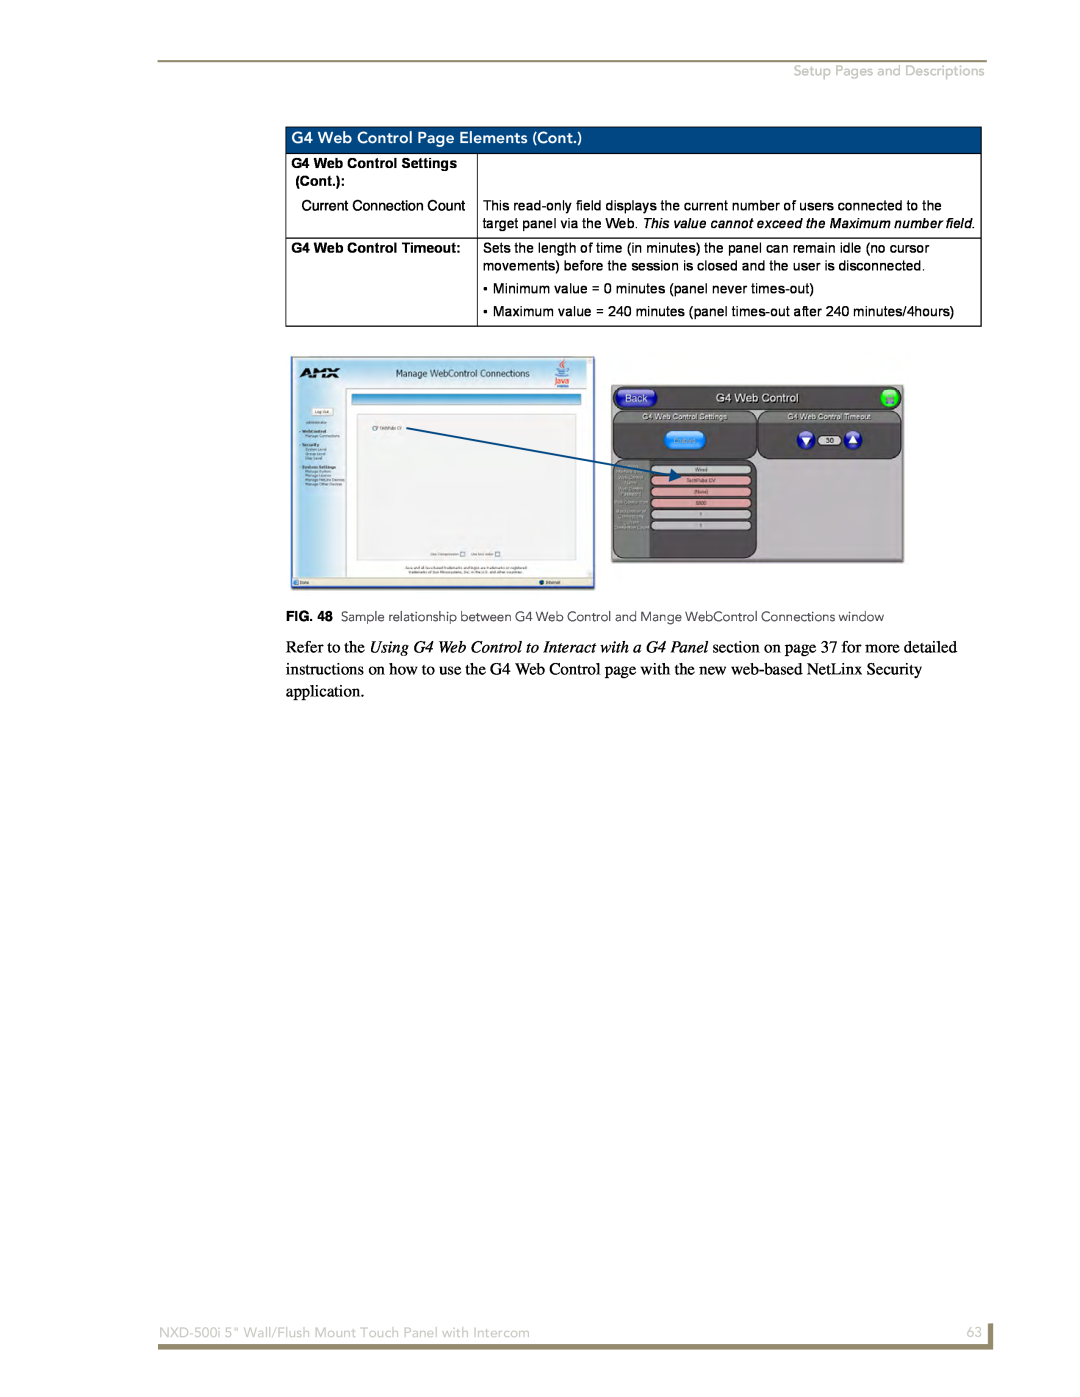 AMX NXD-500i manual G4 Web Control Page Elements Cont, Setup Pages and Descriptions 